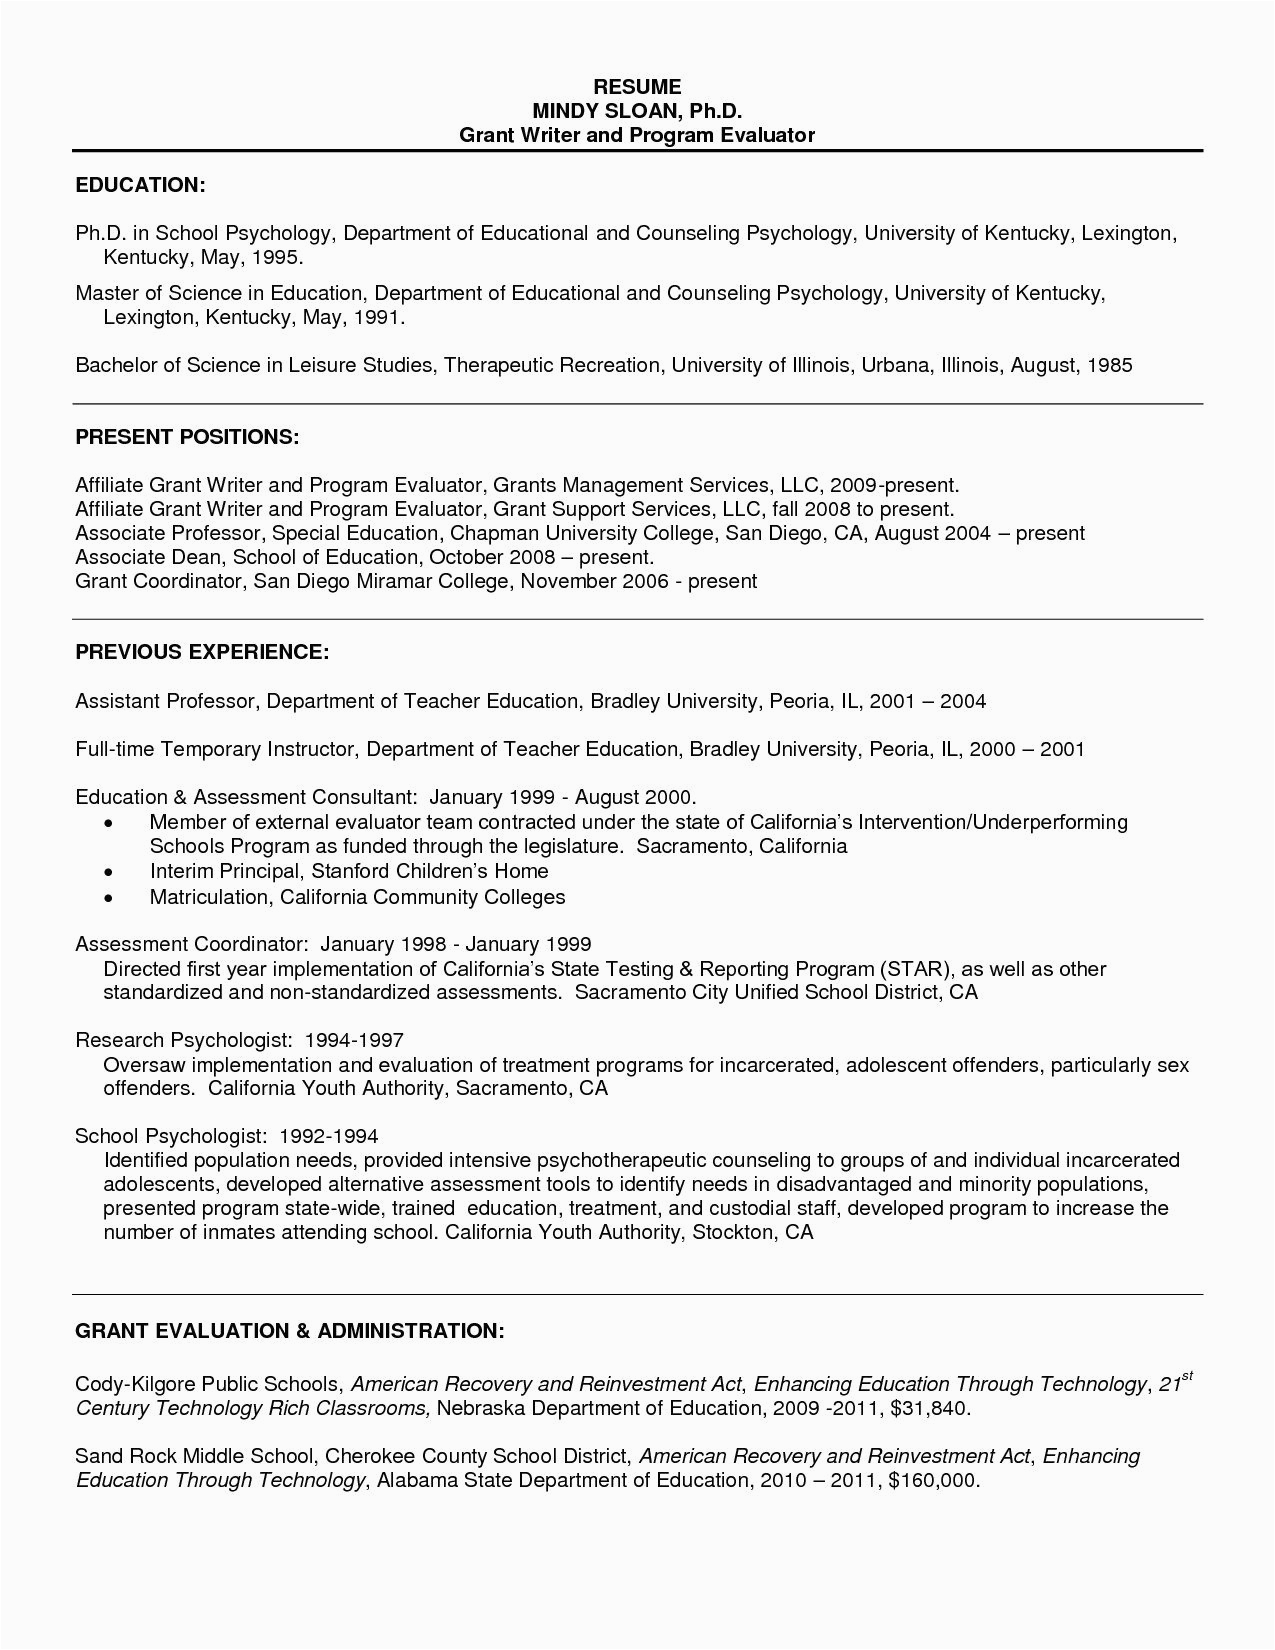 Sample Resume Objective for Master S Program Resume Sample for Psychology Graduate Free Resume Templates